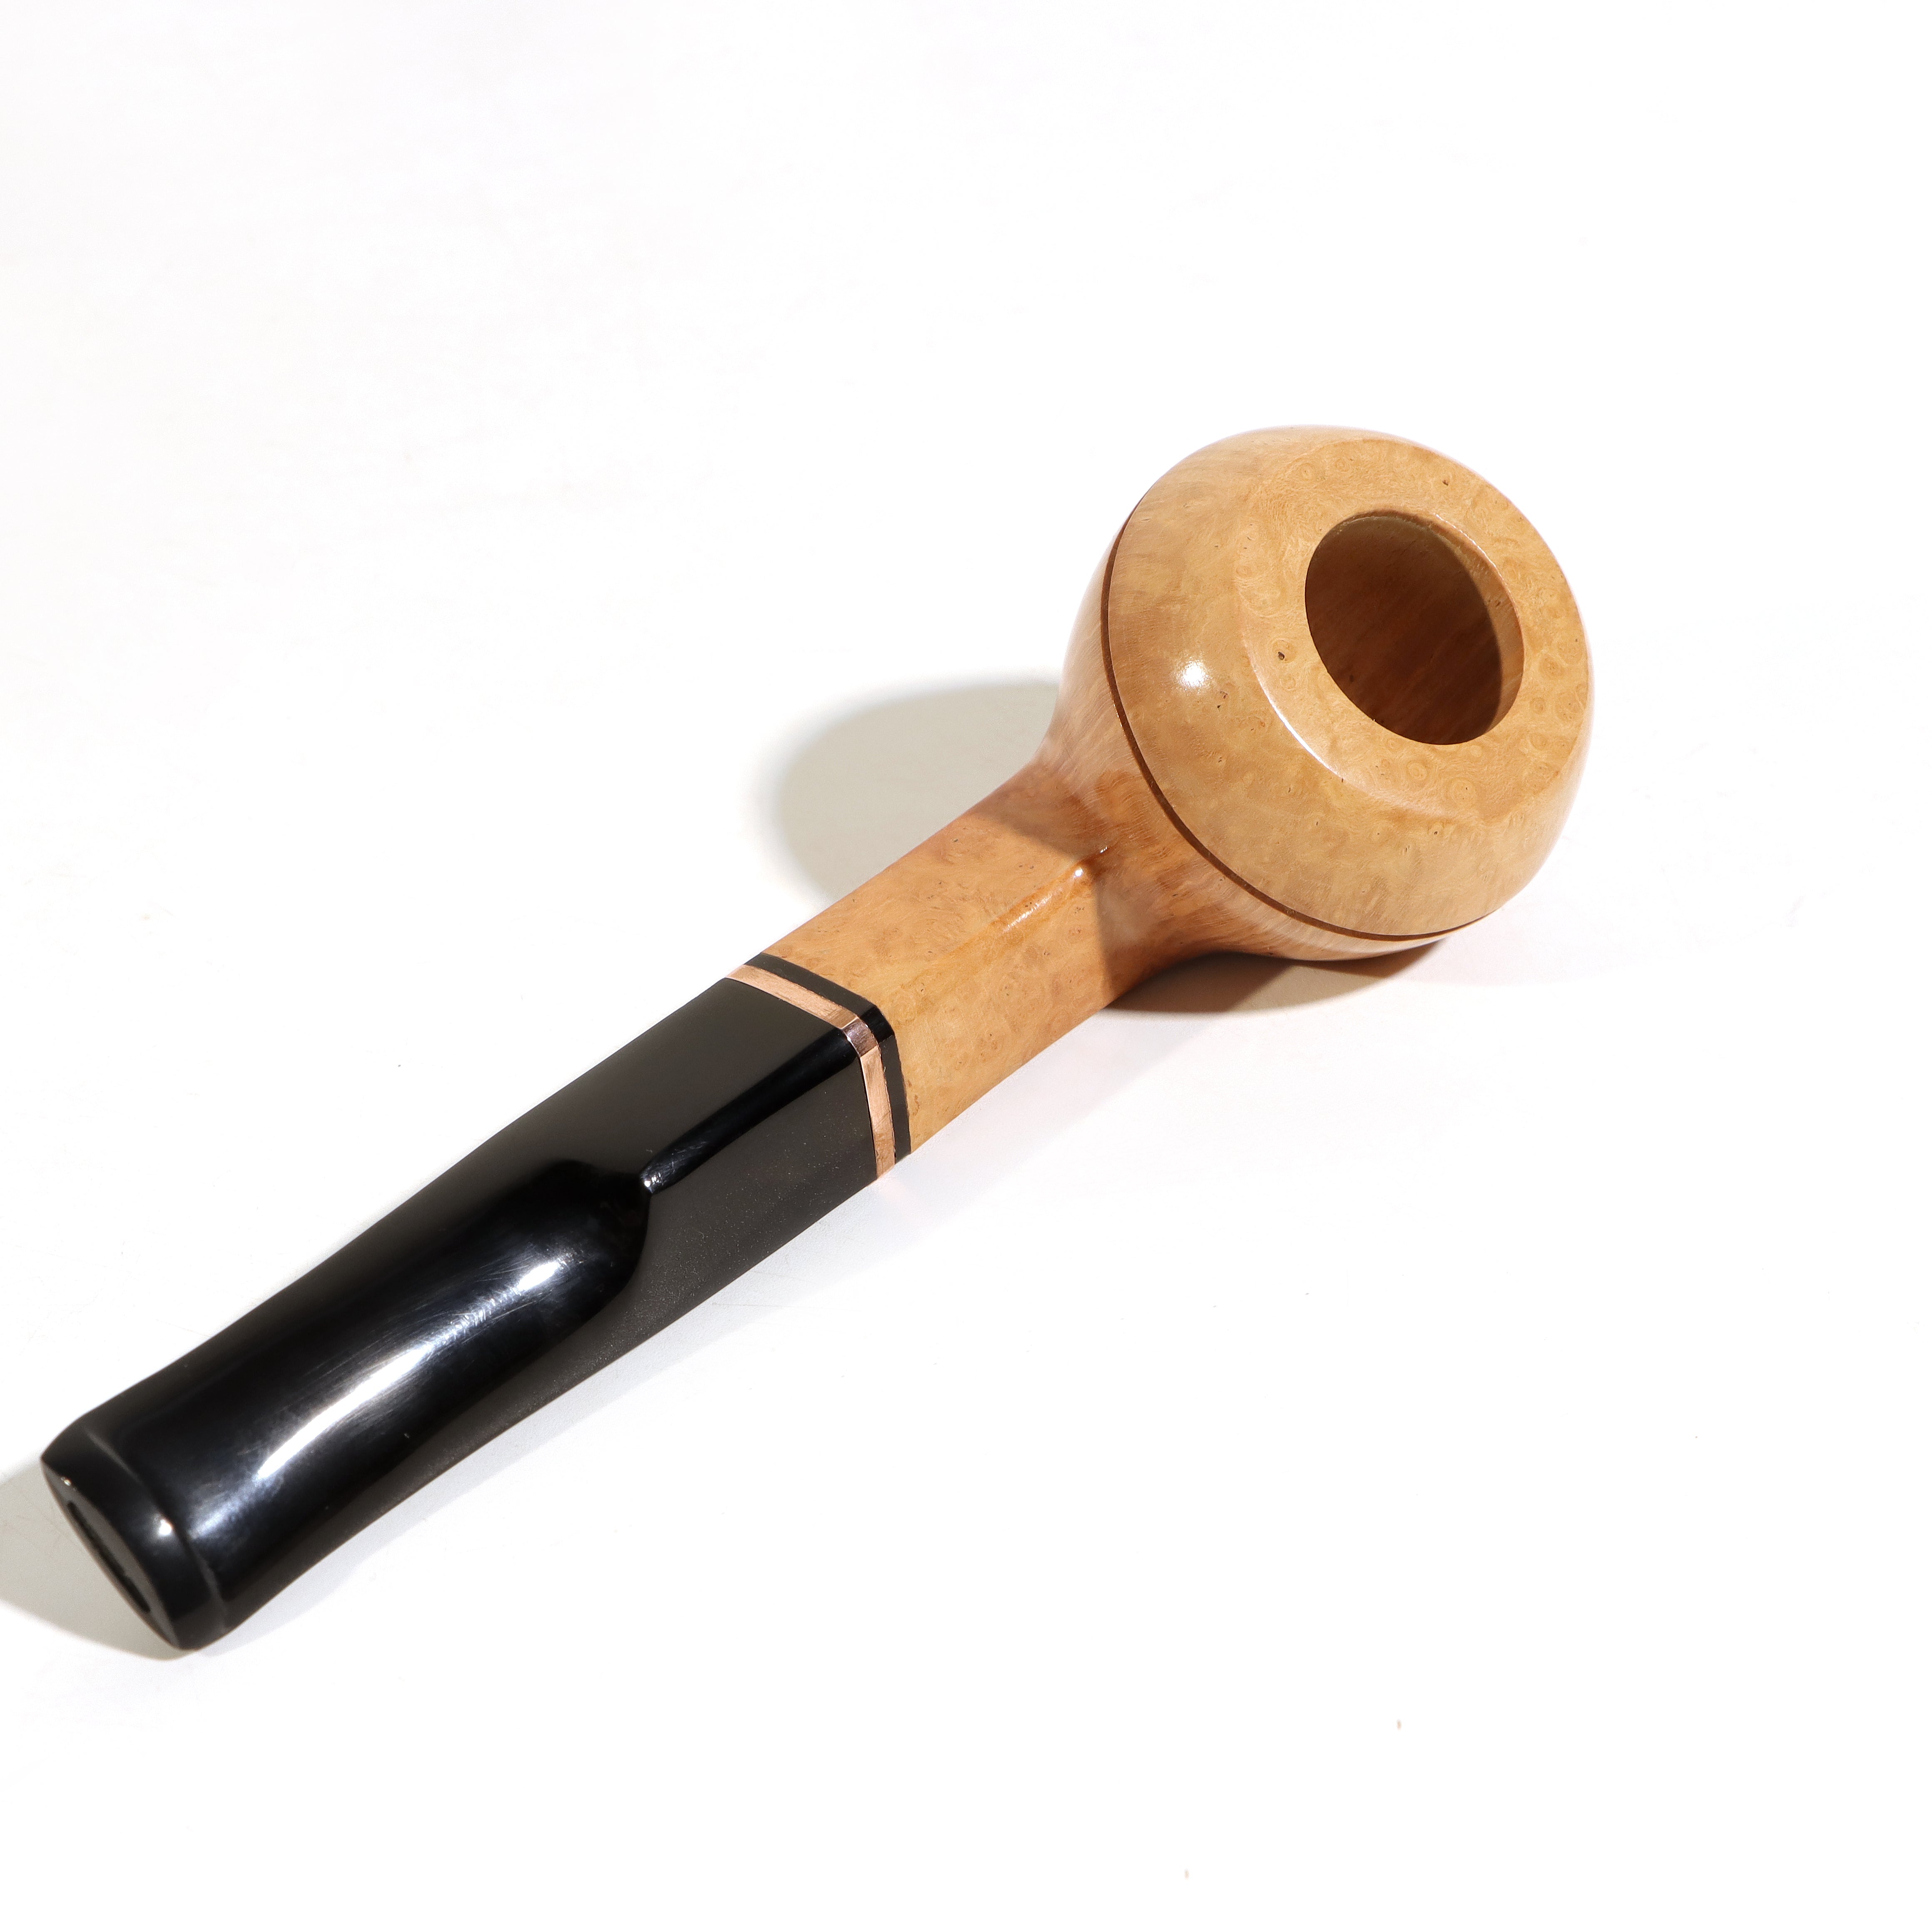 Idea Pipes straight Briar Wood Color Tobacco Pipe Bulldog Shape No Filter With Ebonite Stem